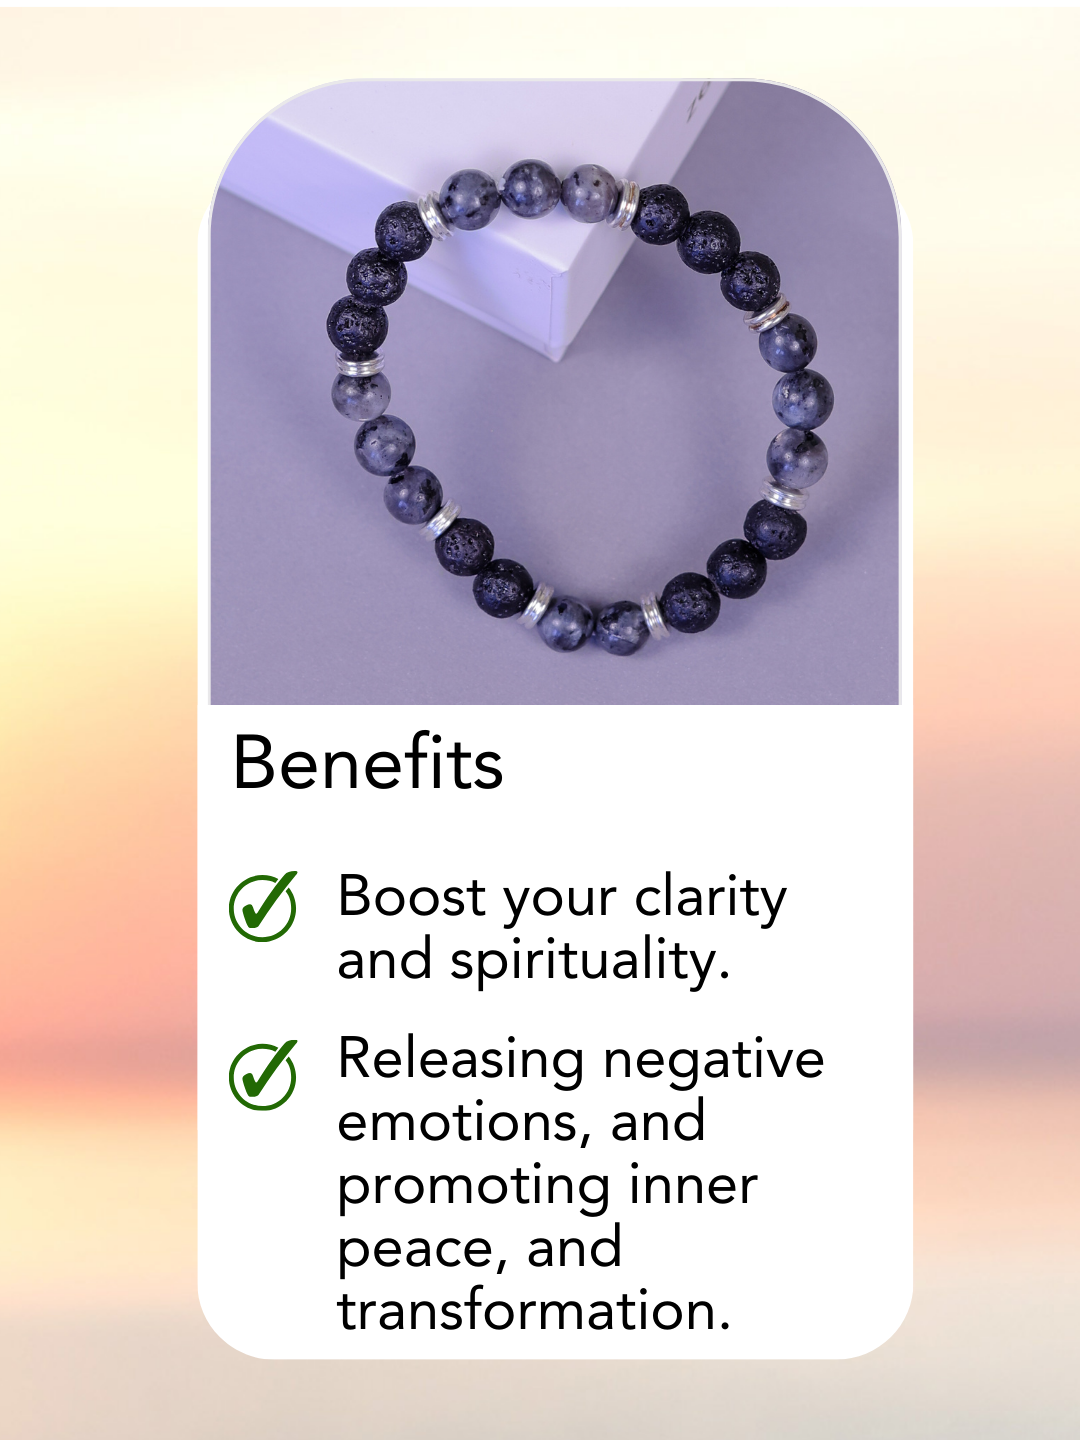 5 Benefits of Gemstone Bracelets for Uplifting Your Mood